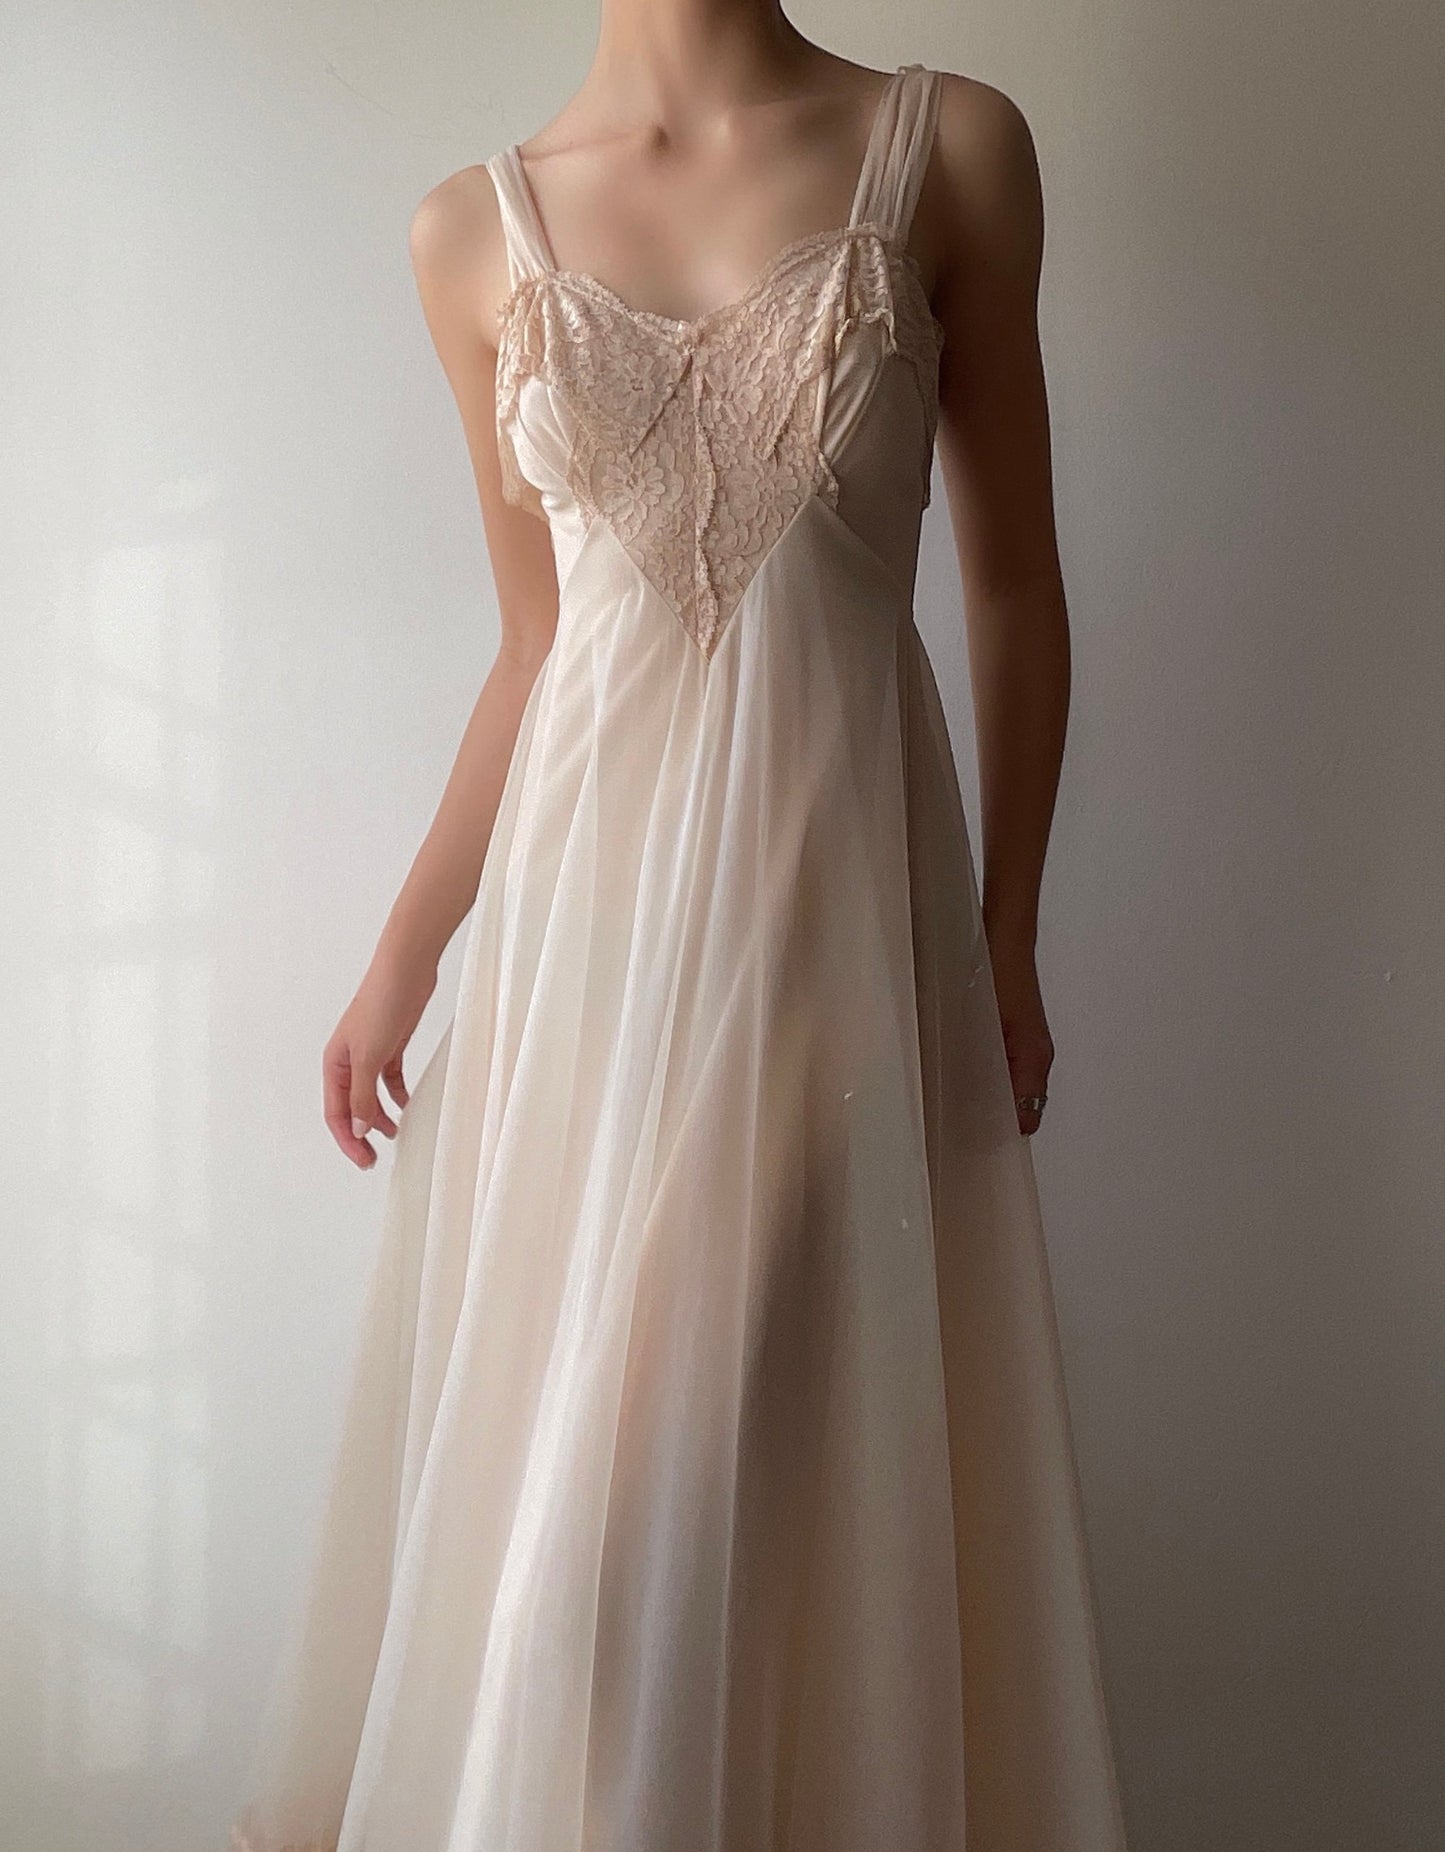 Elegant Peignoir Dress (XS/S)